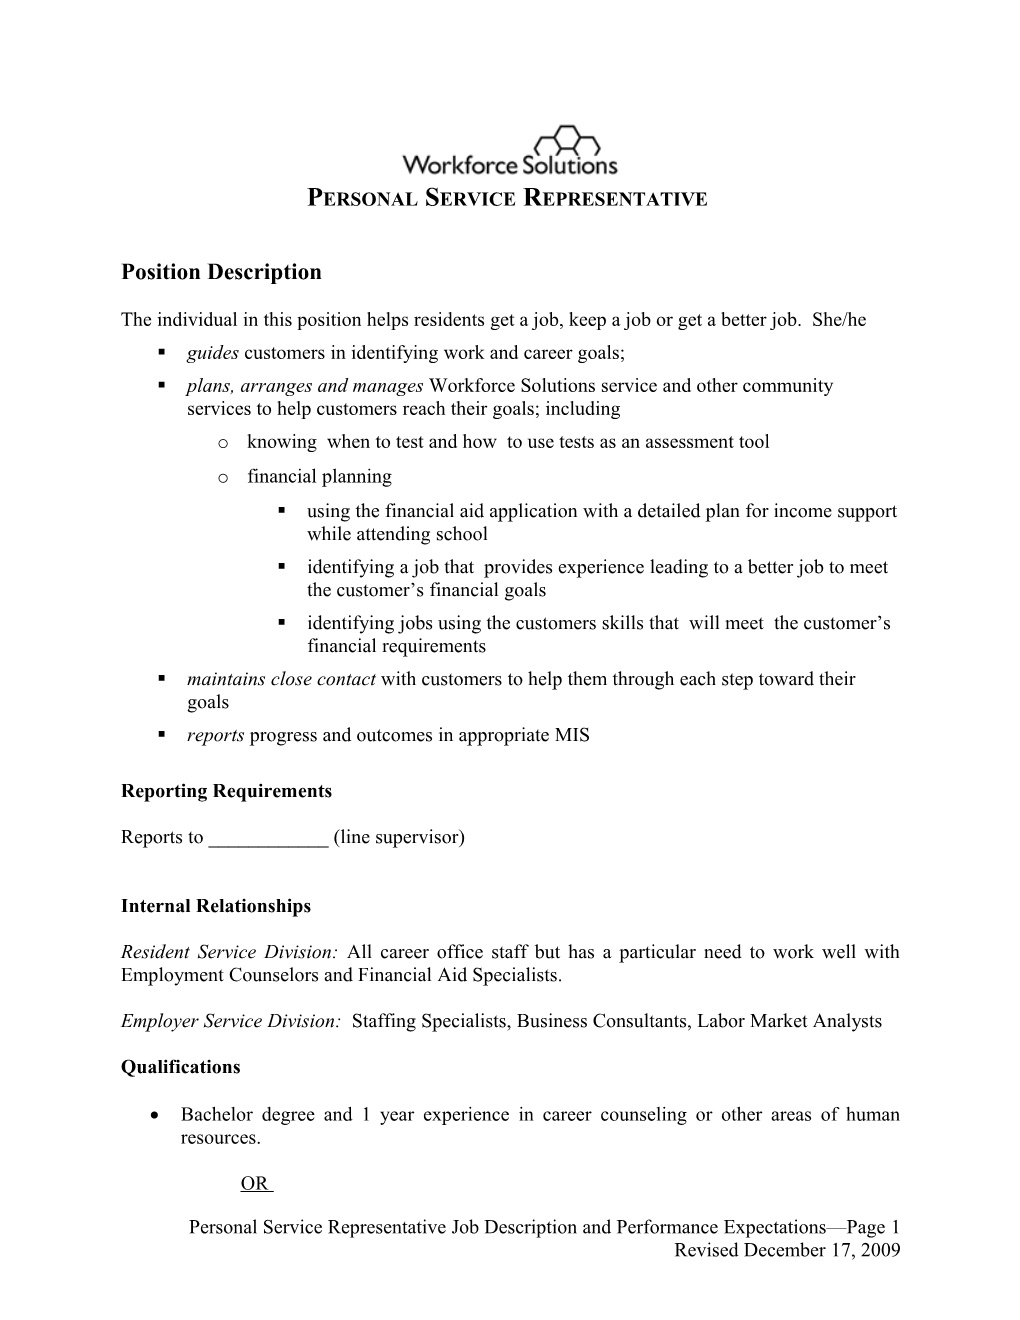 Job Description - Personal Service Representative